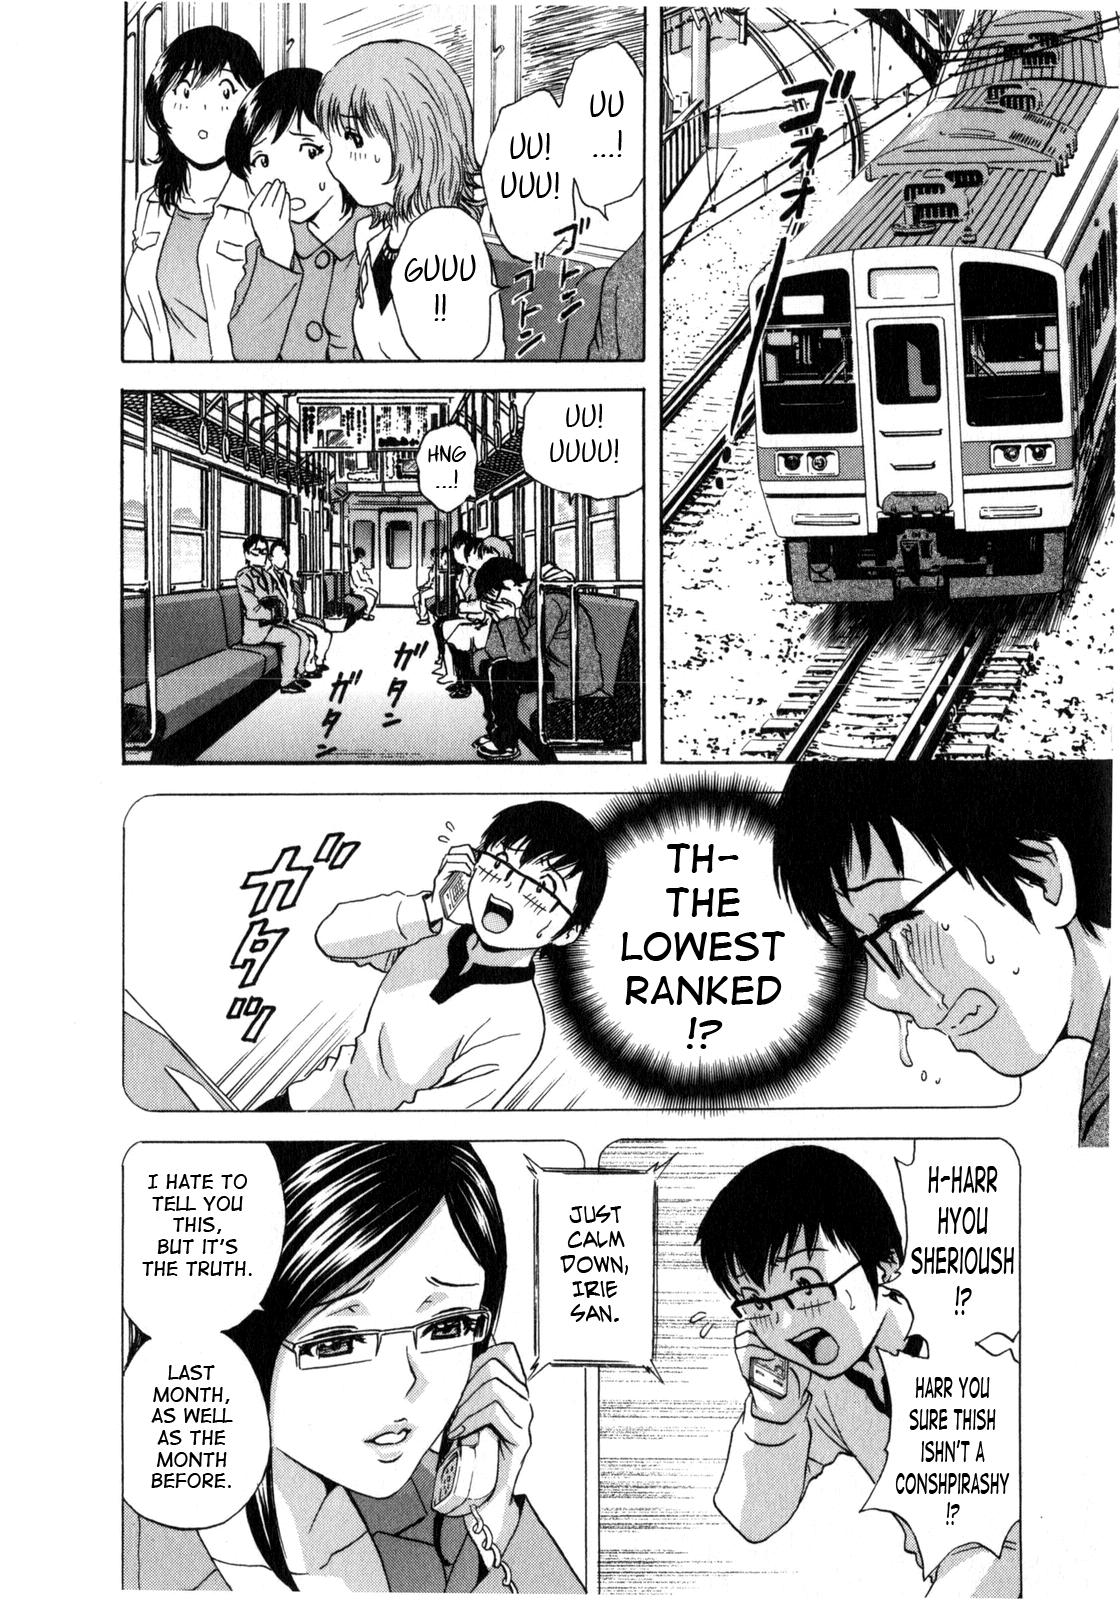 [Hidemaru] Life with Married Women Just Like a Manga 2 - Ch. 1-6 [English] {Tadanohito} 70